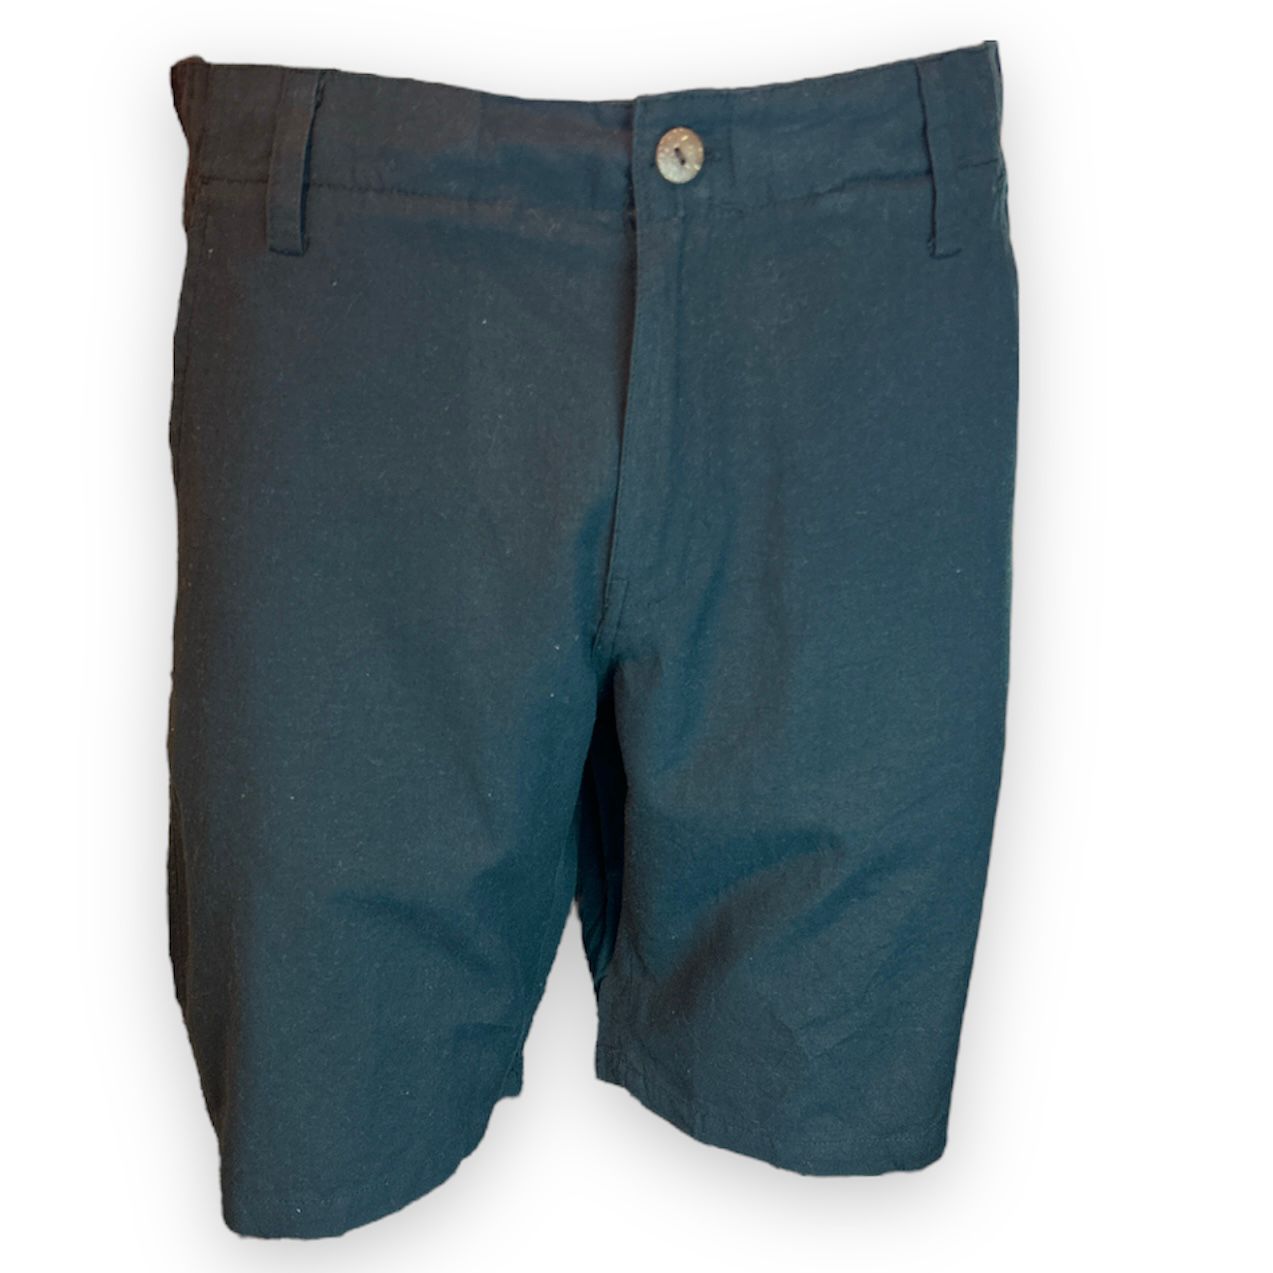 Men's Fine Cotton Summer Shorts